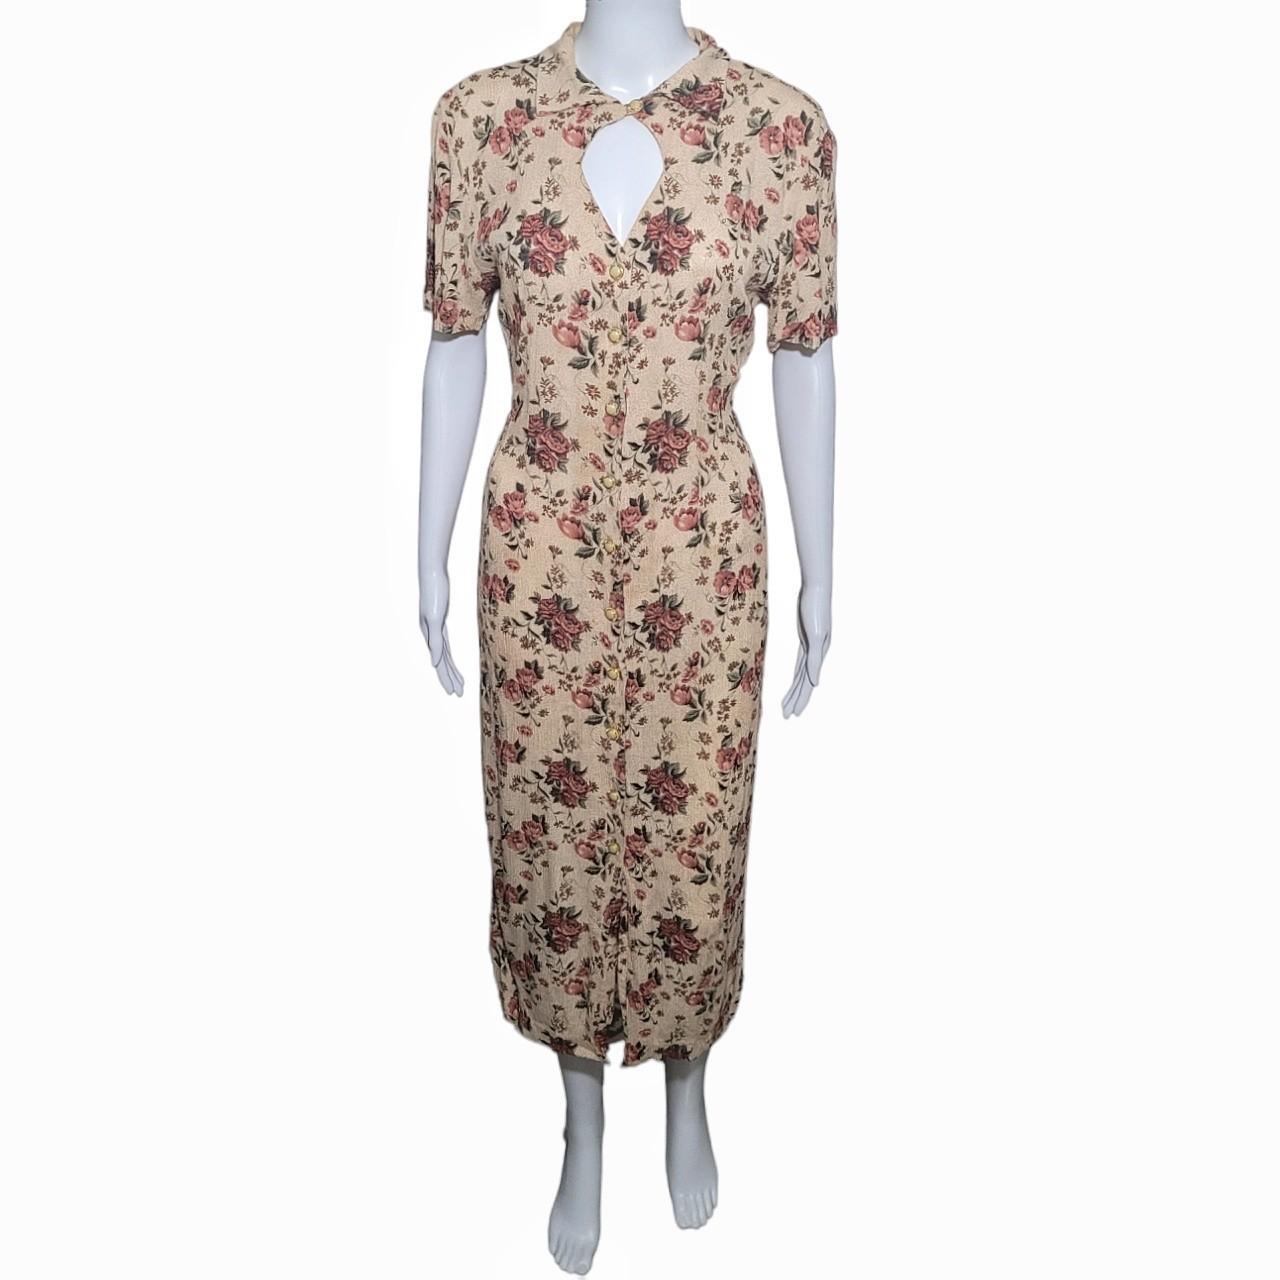 90s Floral Dress. Cute little vintage dress. In a... - Depop